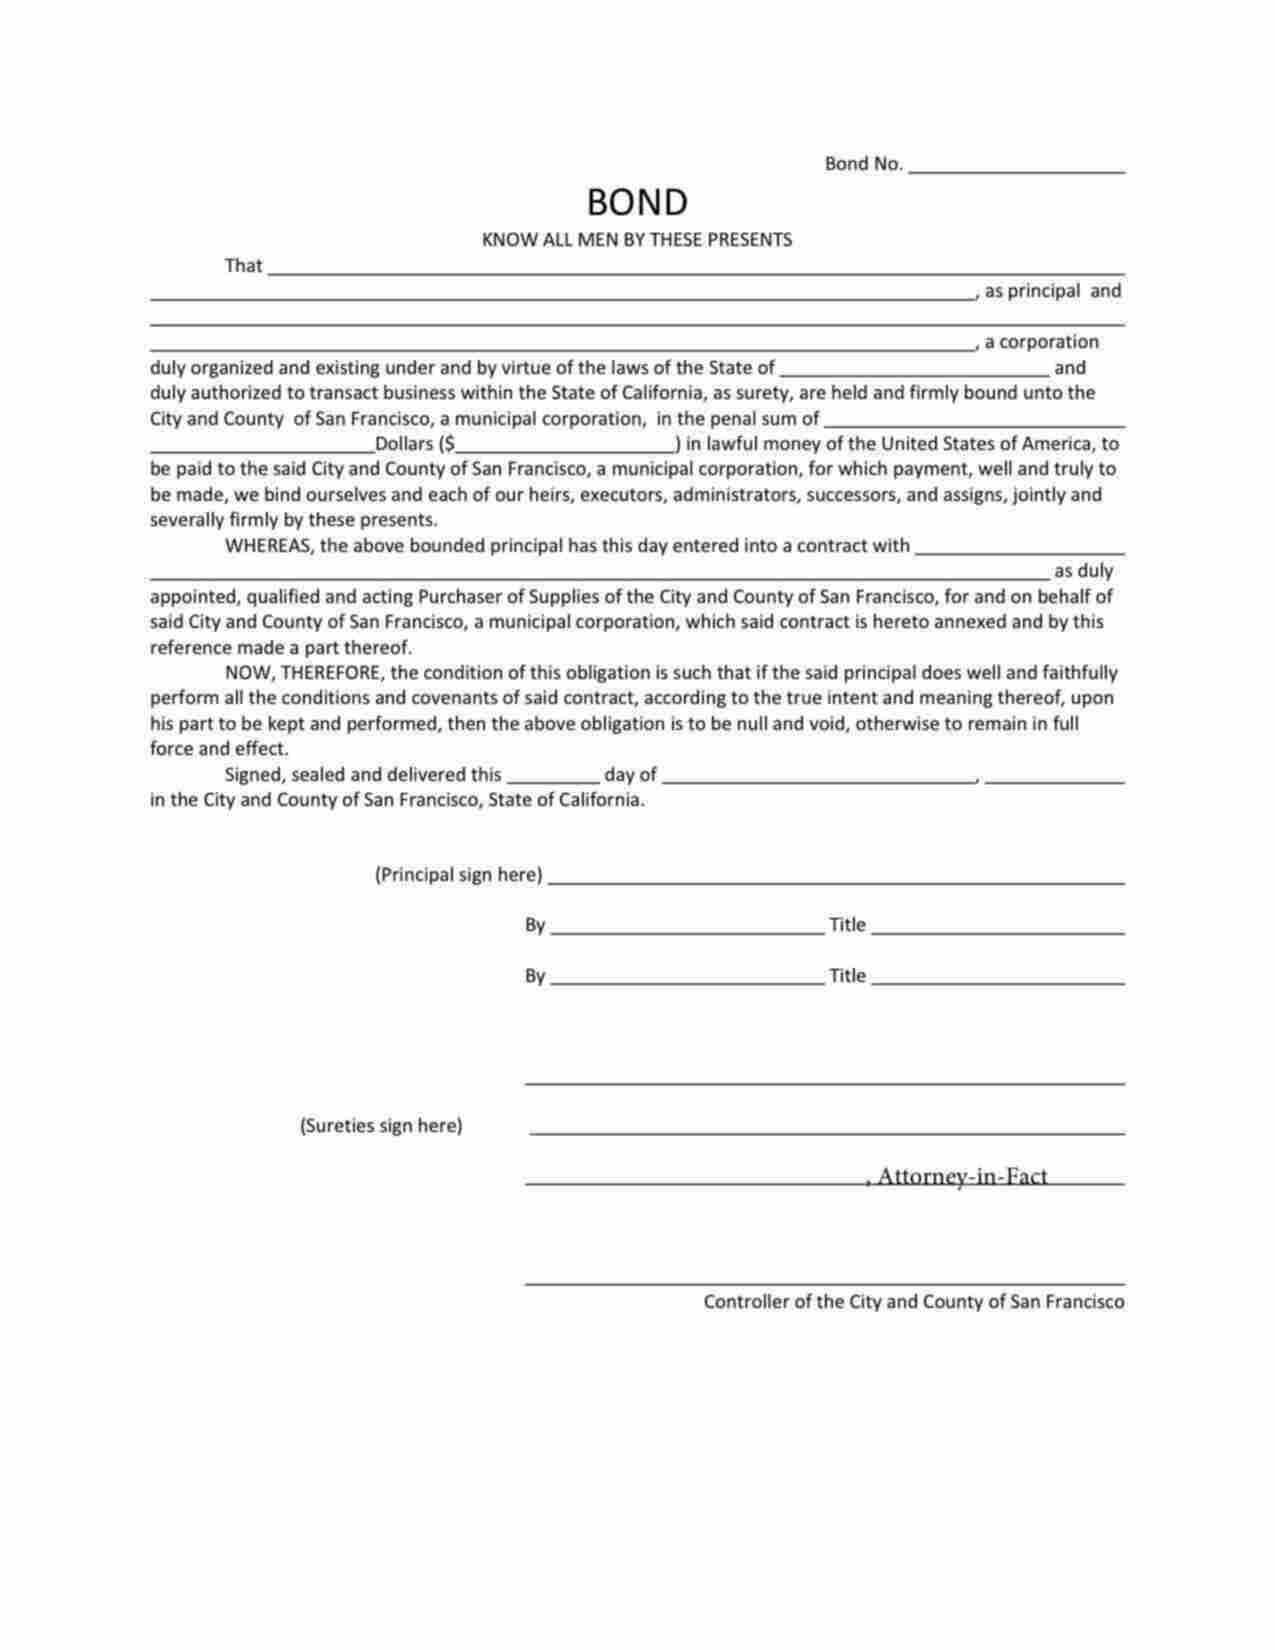 California Supply Contract Bond Form